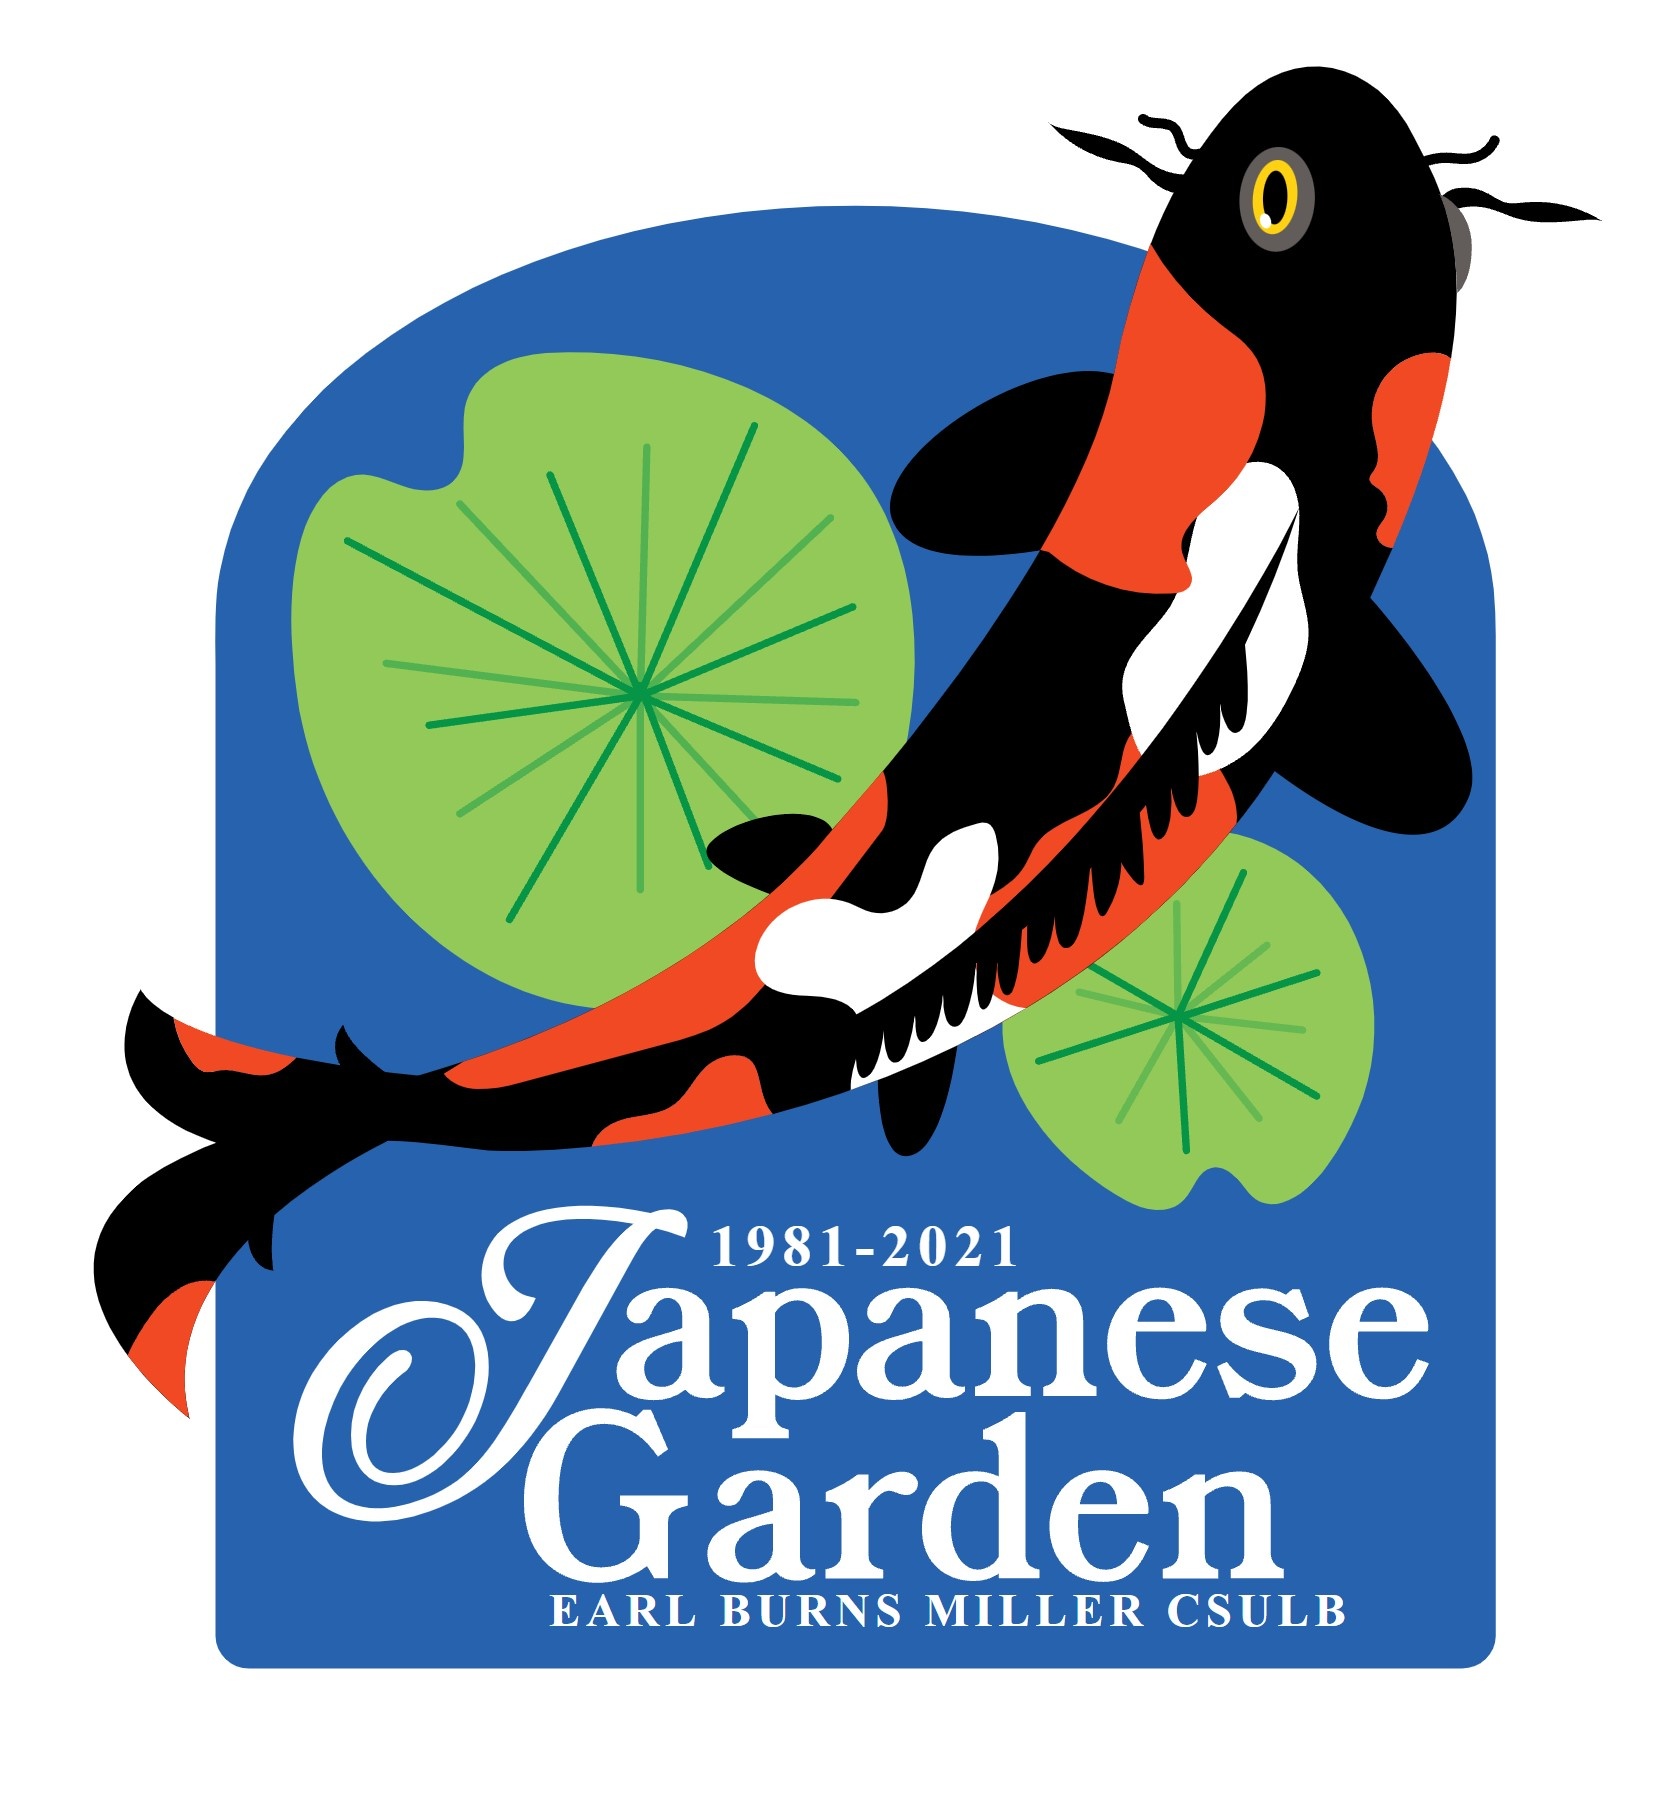 Earl Burns Miller Japanese Garden, C S U L B 70th Anniversary logo